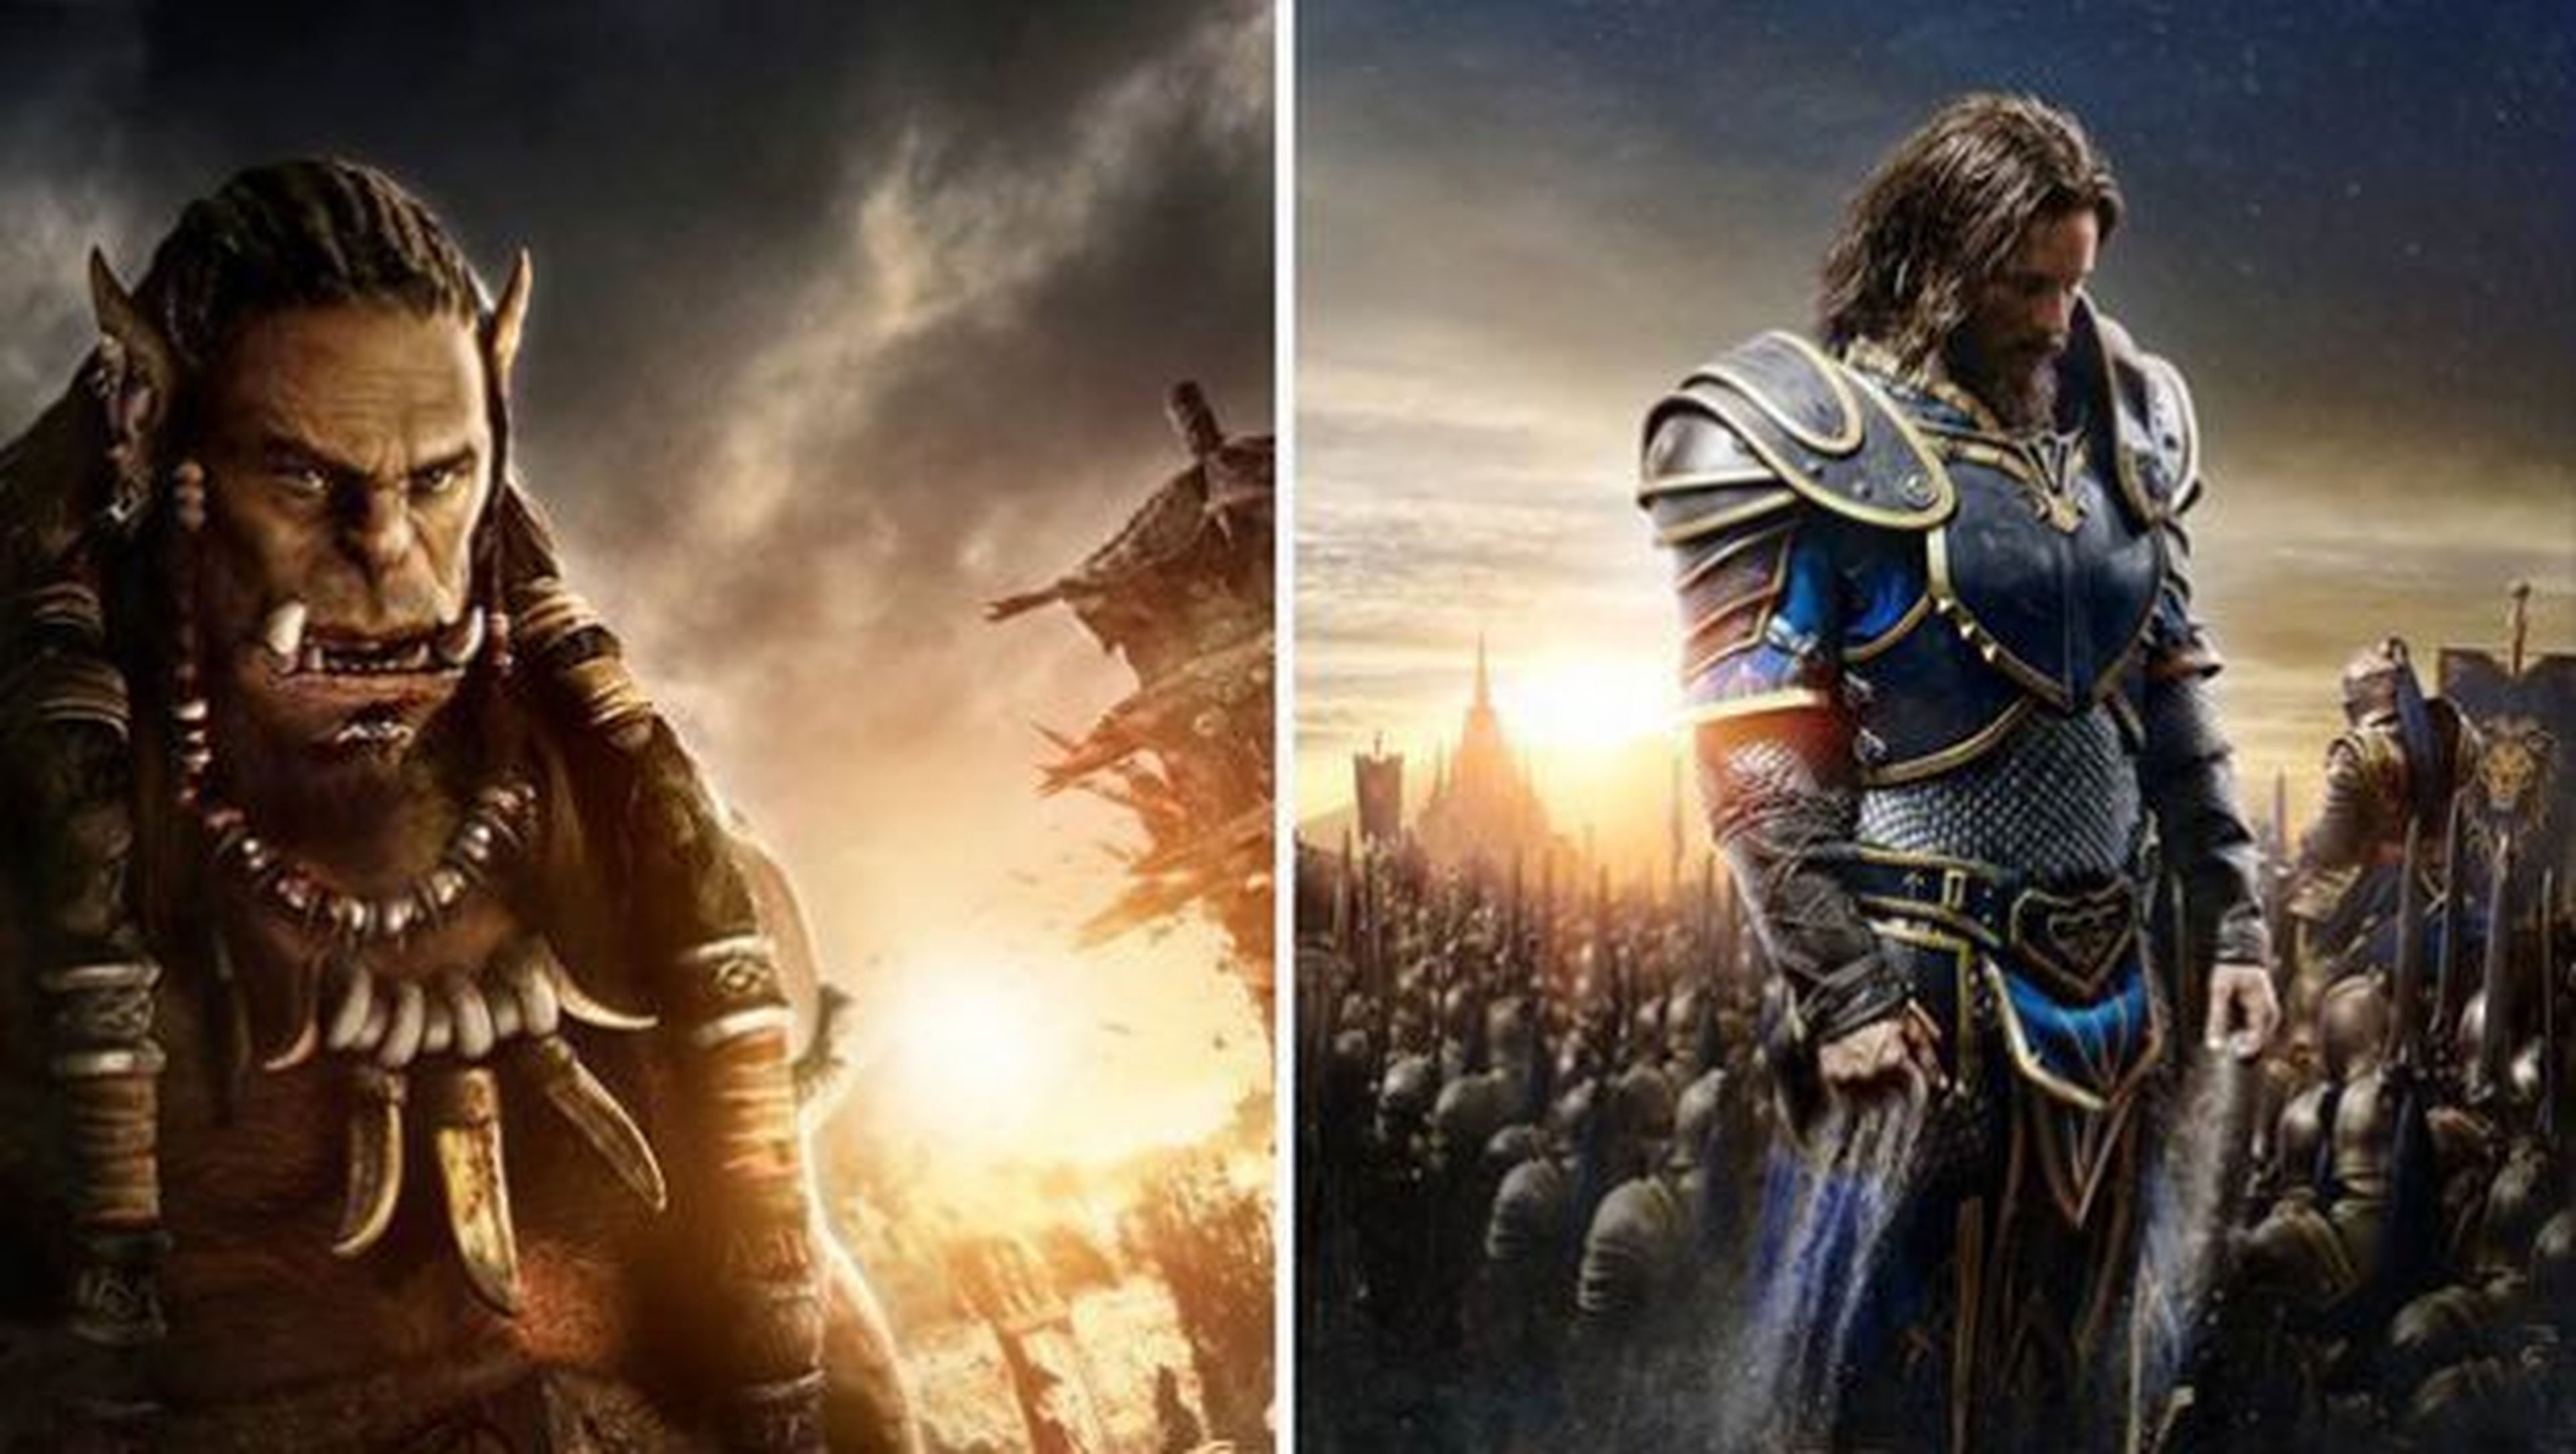 El teaser de Warcraft promete una película épica y masiva